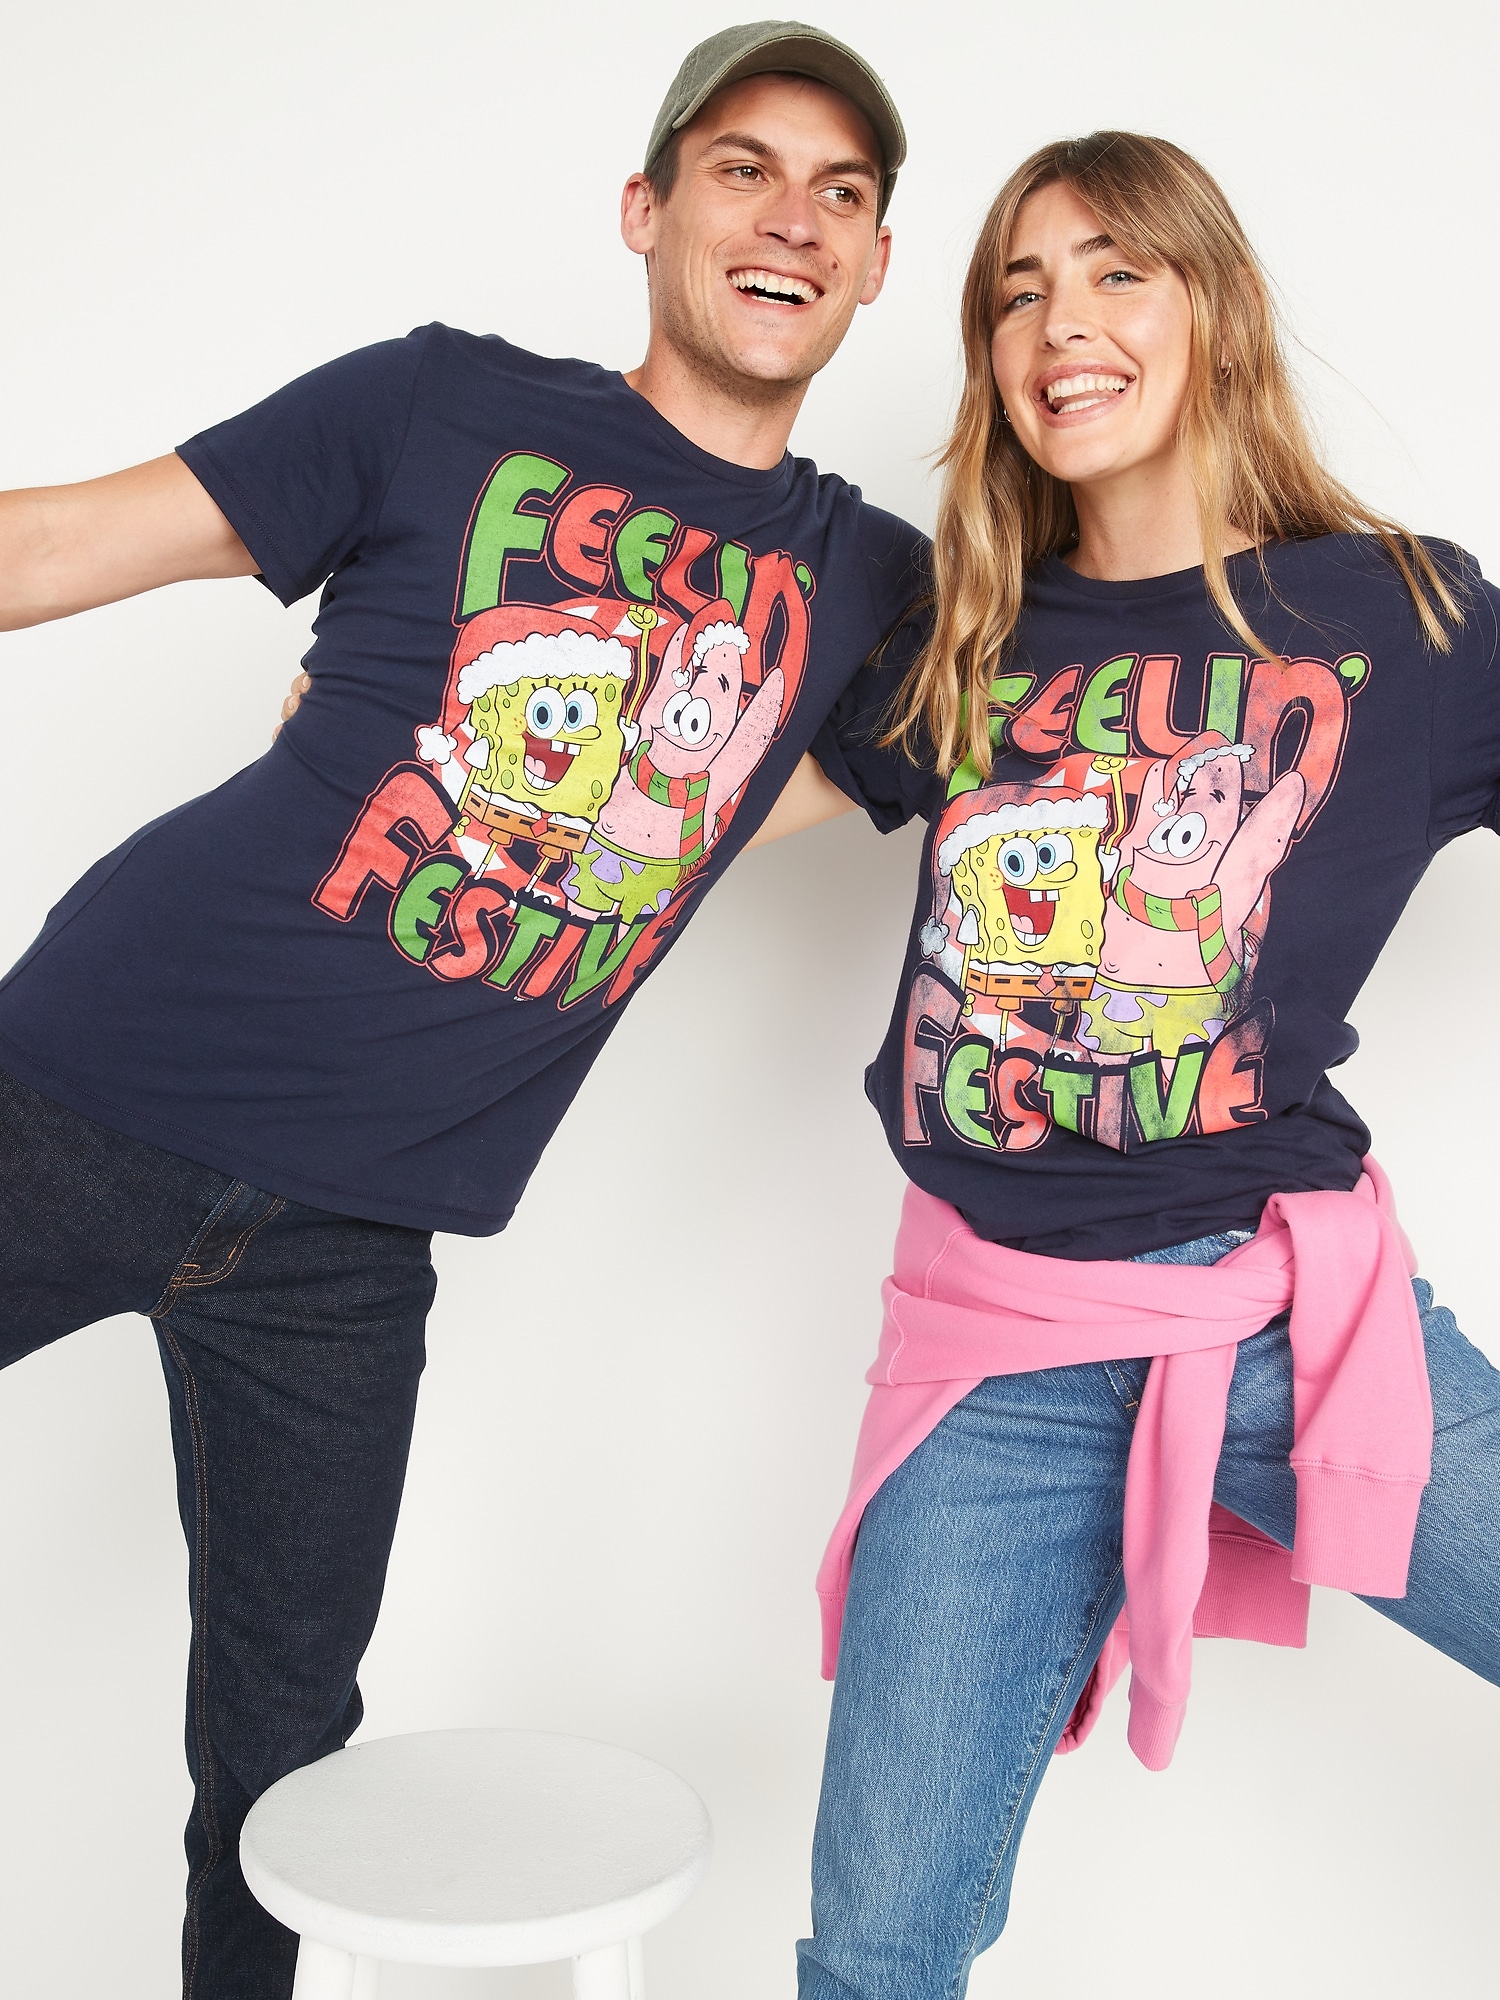 SpongeBob SquarePants™ "Feelin' Festive" Gender-Neutral T-Shirt for Adults